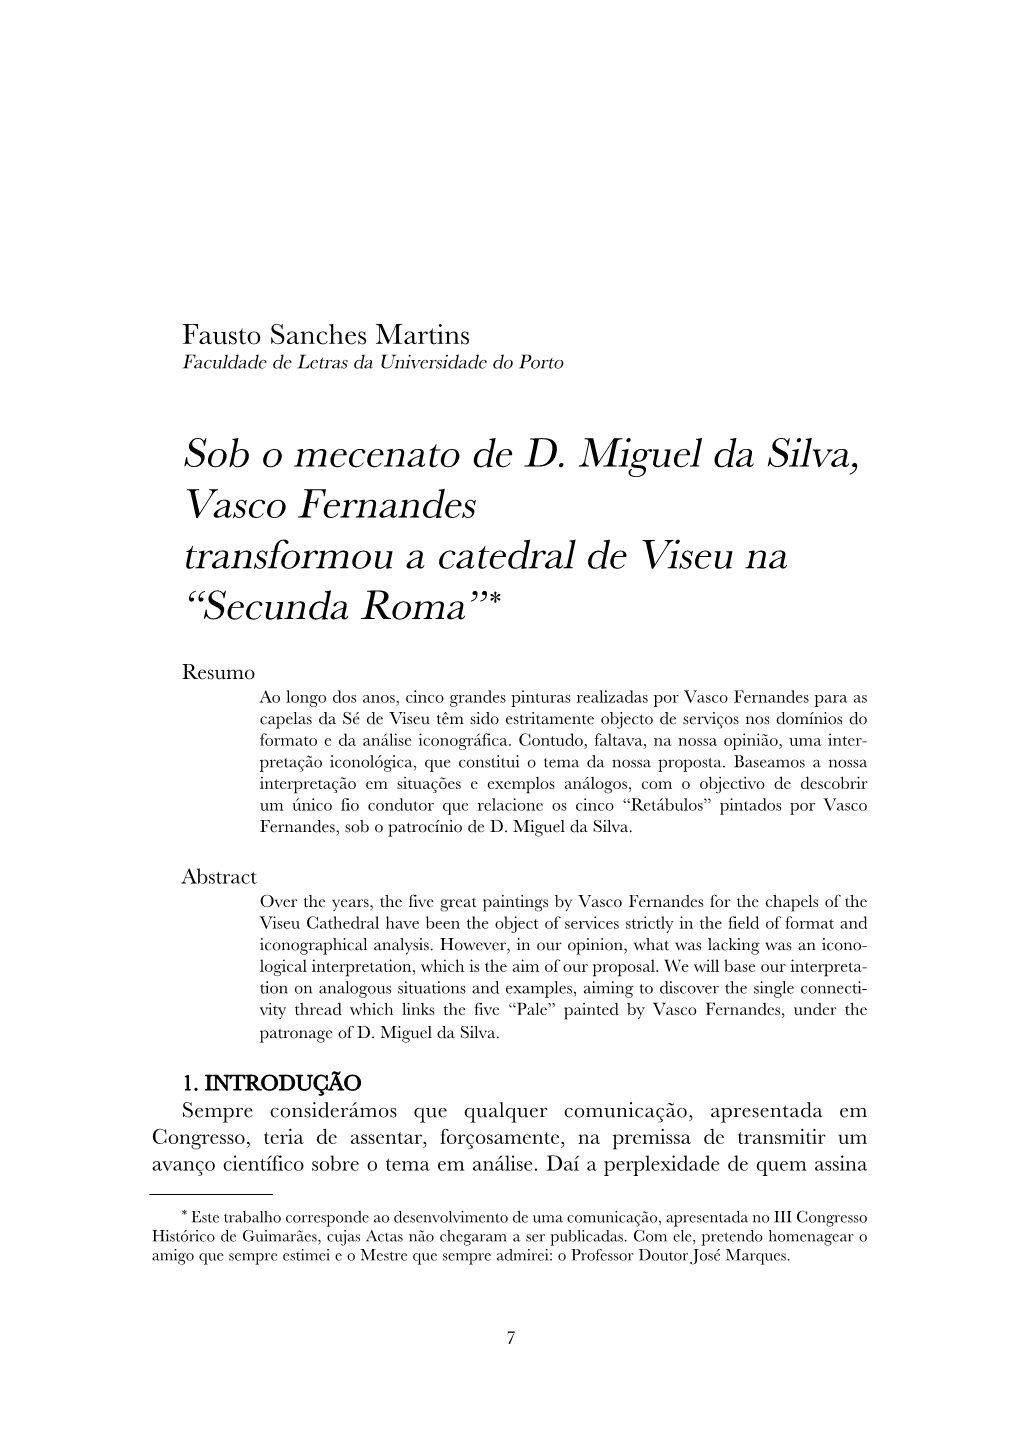 Sob O Mecenato De D. Miguel Da Silva, Vasco Fernandes Transformou a Catedral De Viseu Na “Secunda Roma” *